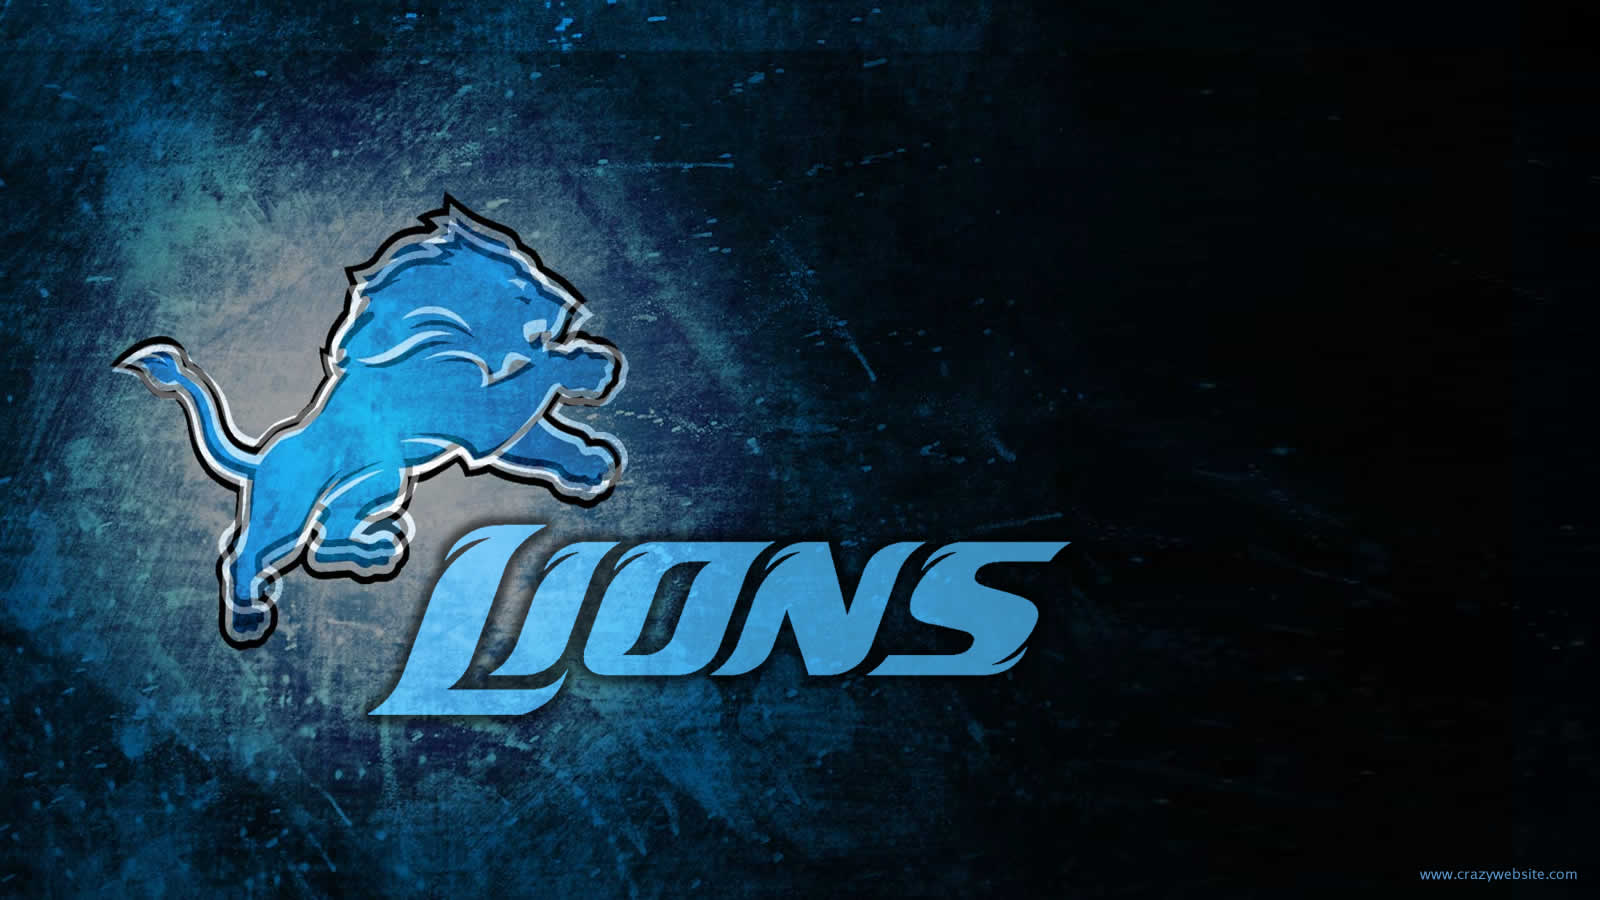 logo wallpaper background click thumbnail to download Detroit Lions